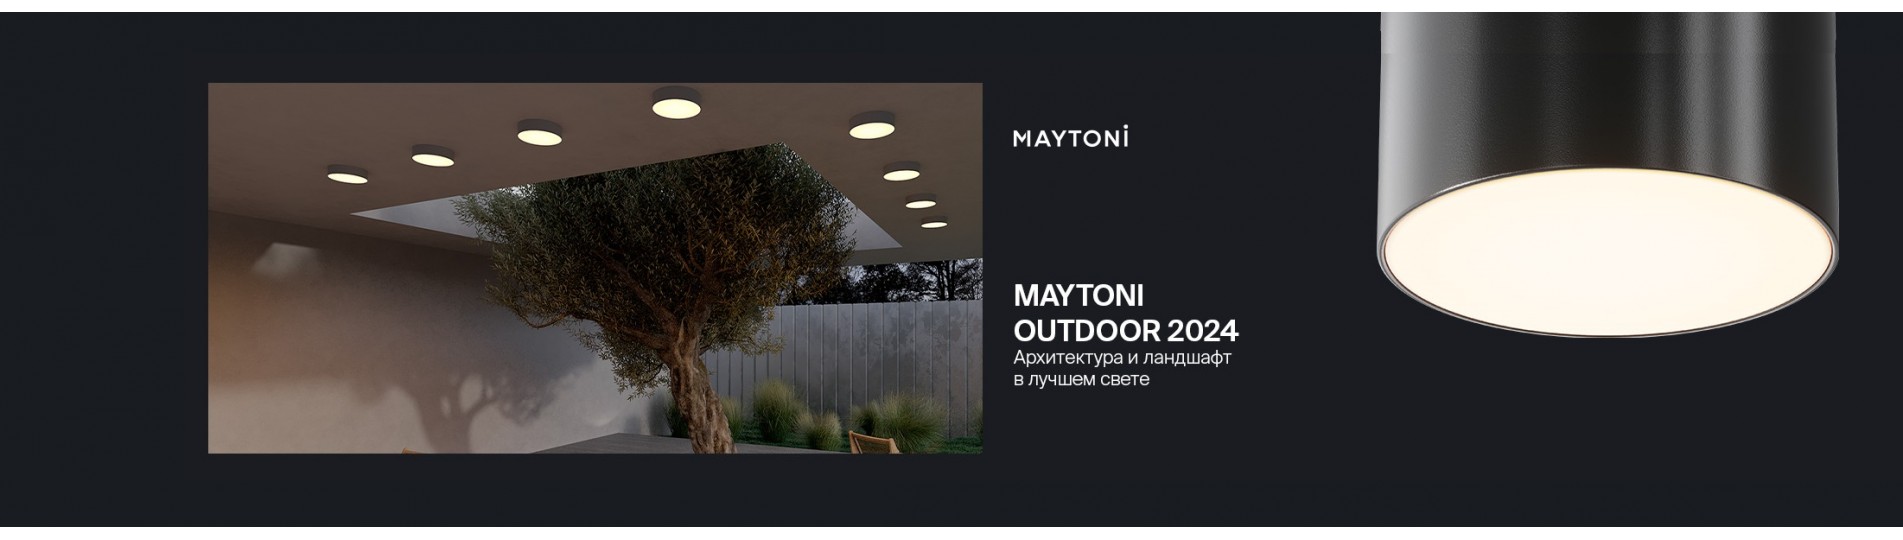 maytoni outdoor 